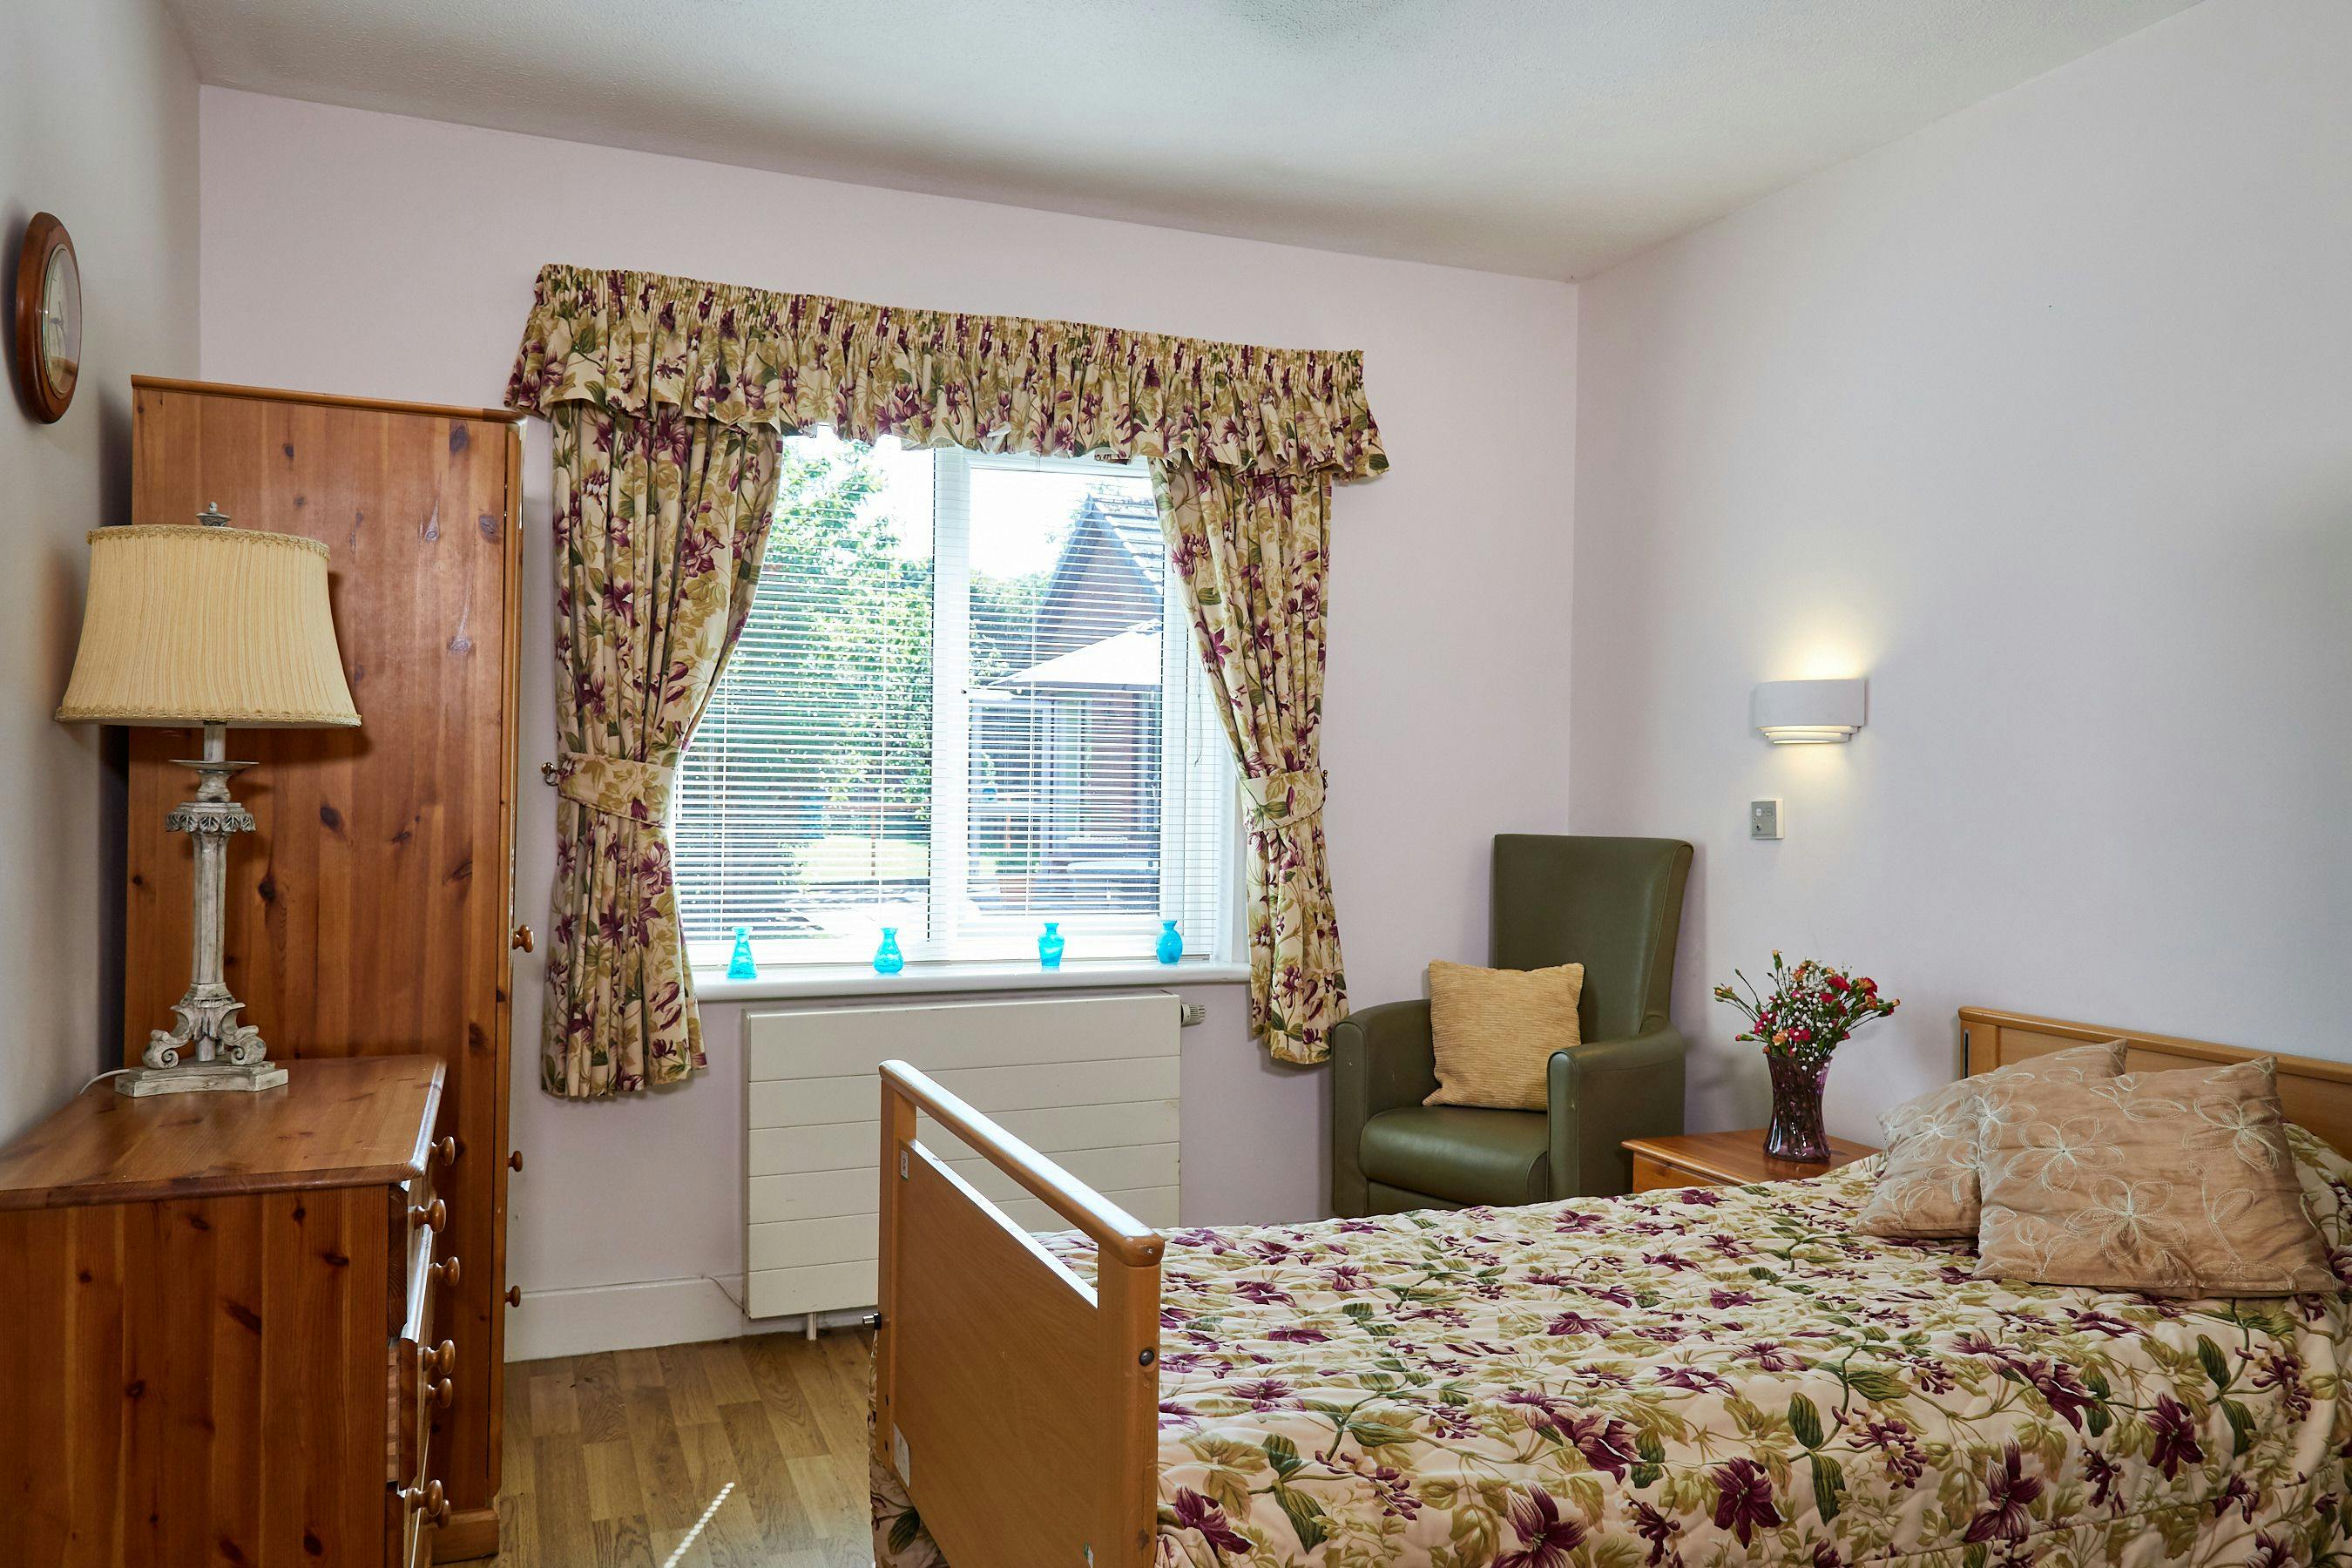 Bedroom of Newlands Care Home in Workington, Cumbria